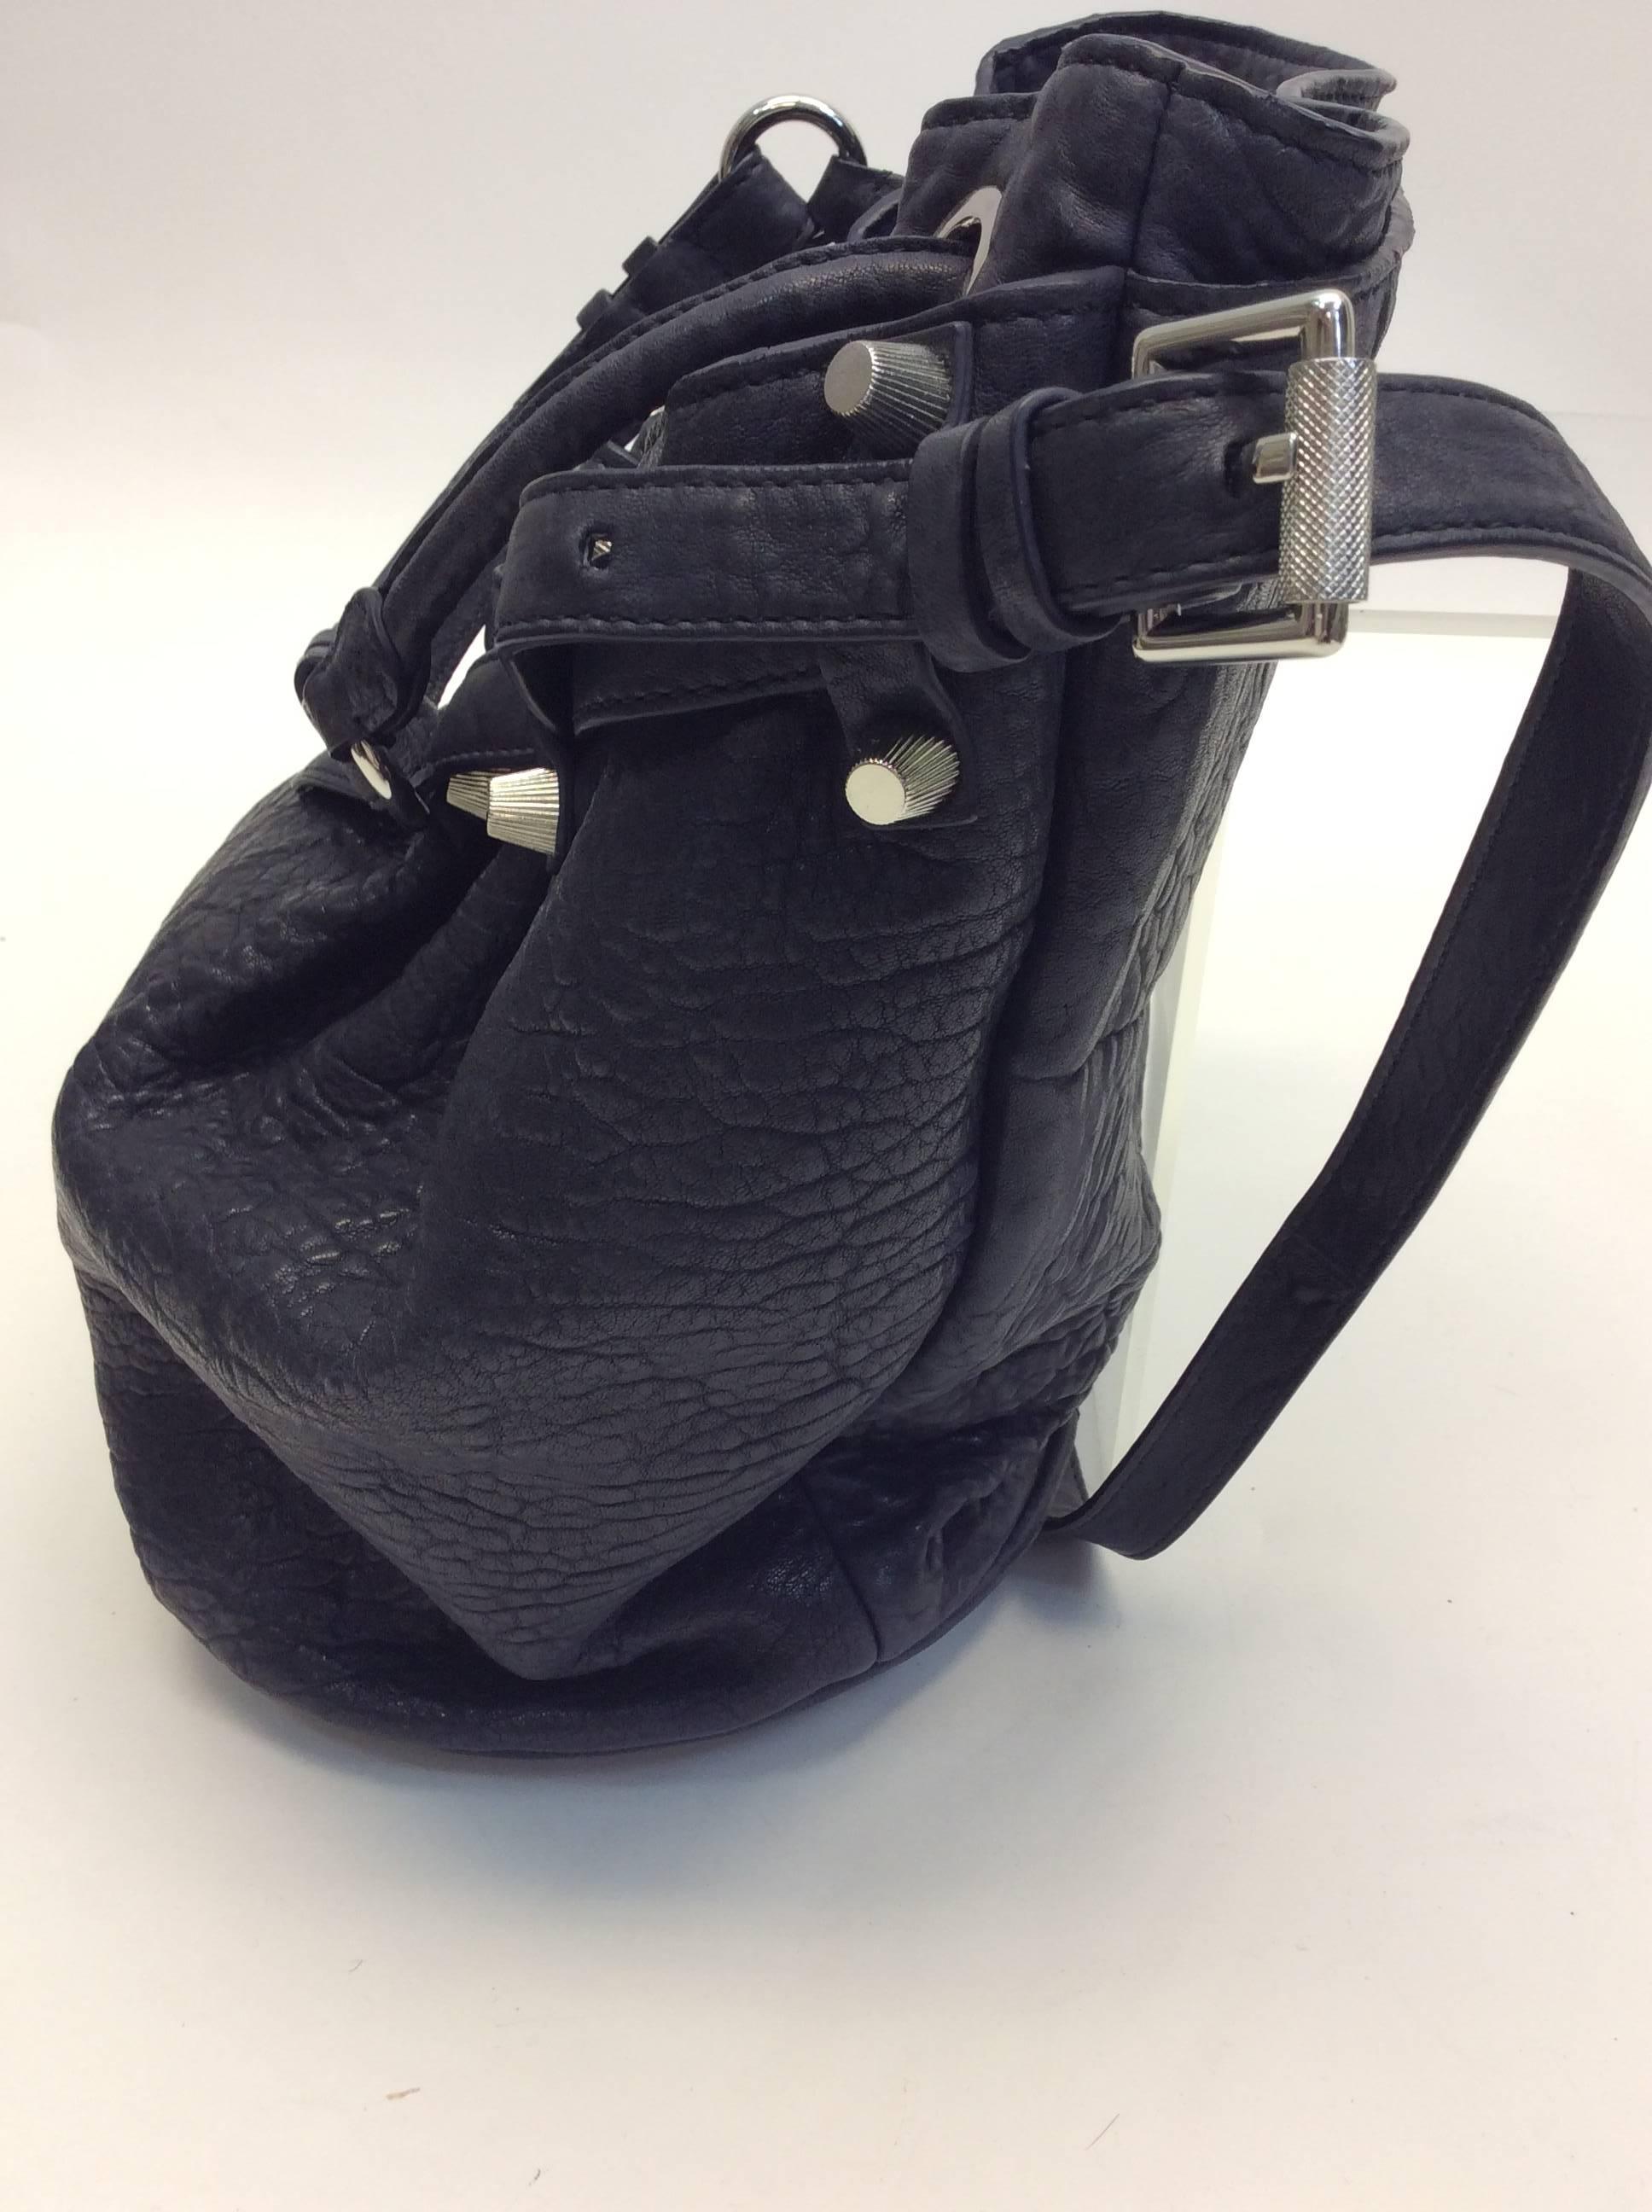 Alexander Wang Navy Studded Leather Bucket Bag
$299
Leather
9